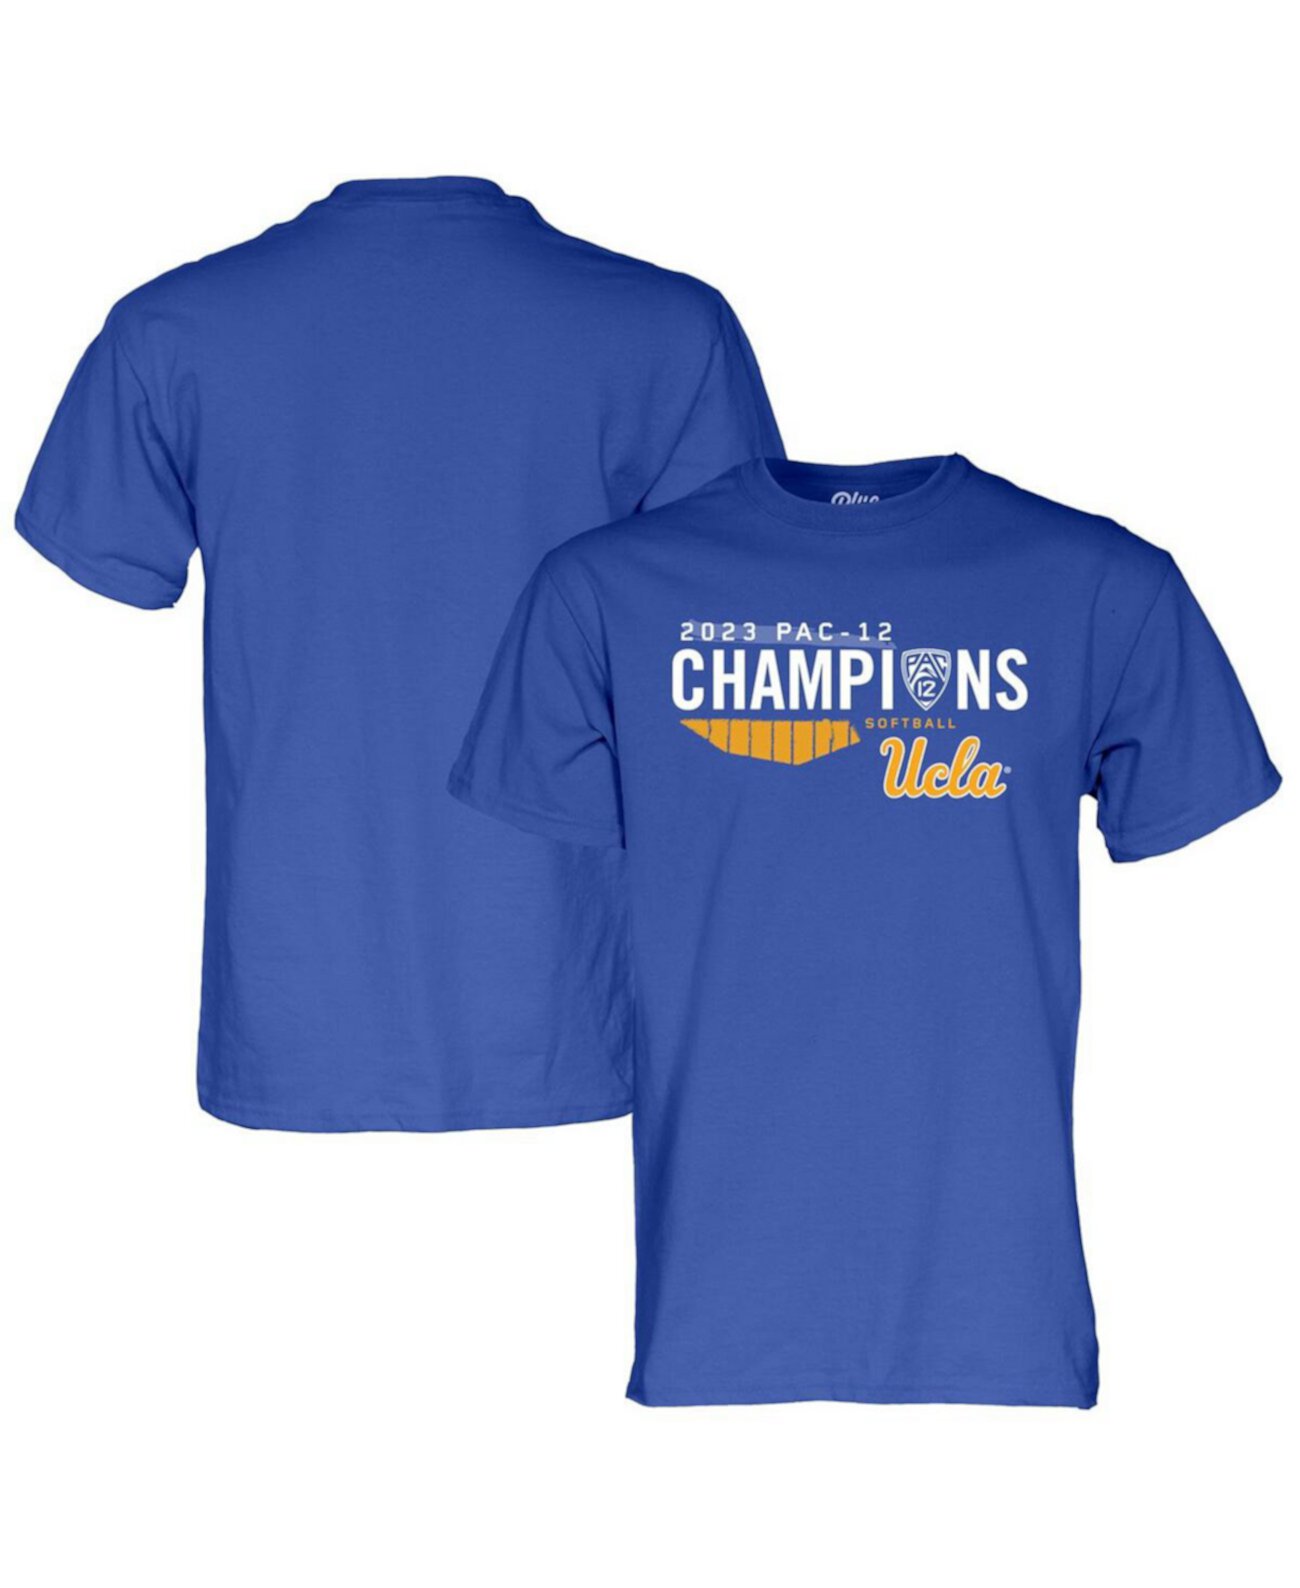 Мужская синяя футболка UCLA Bruins 2023 PAC-12 Softball Regular Season Champions Blue 84